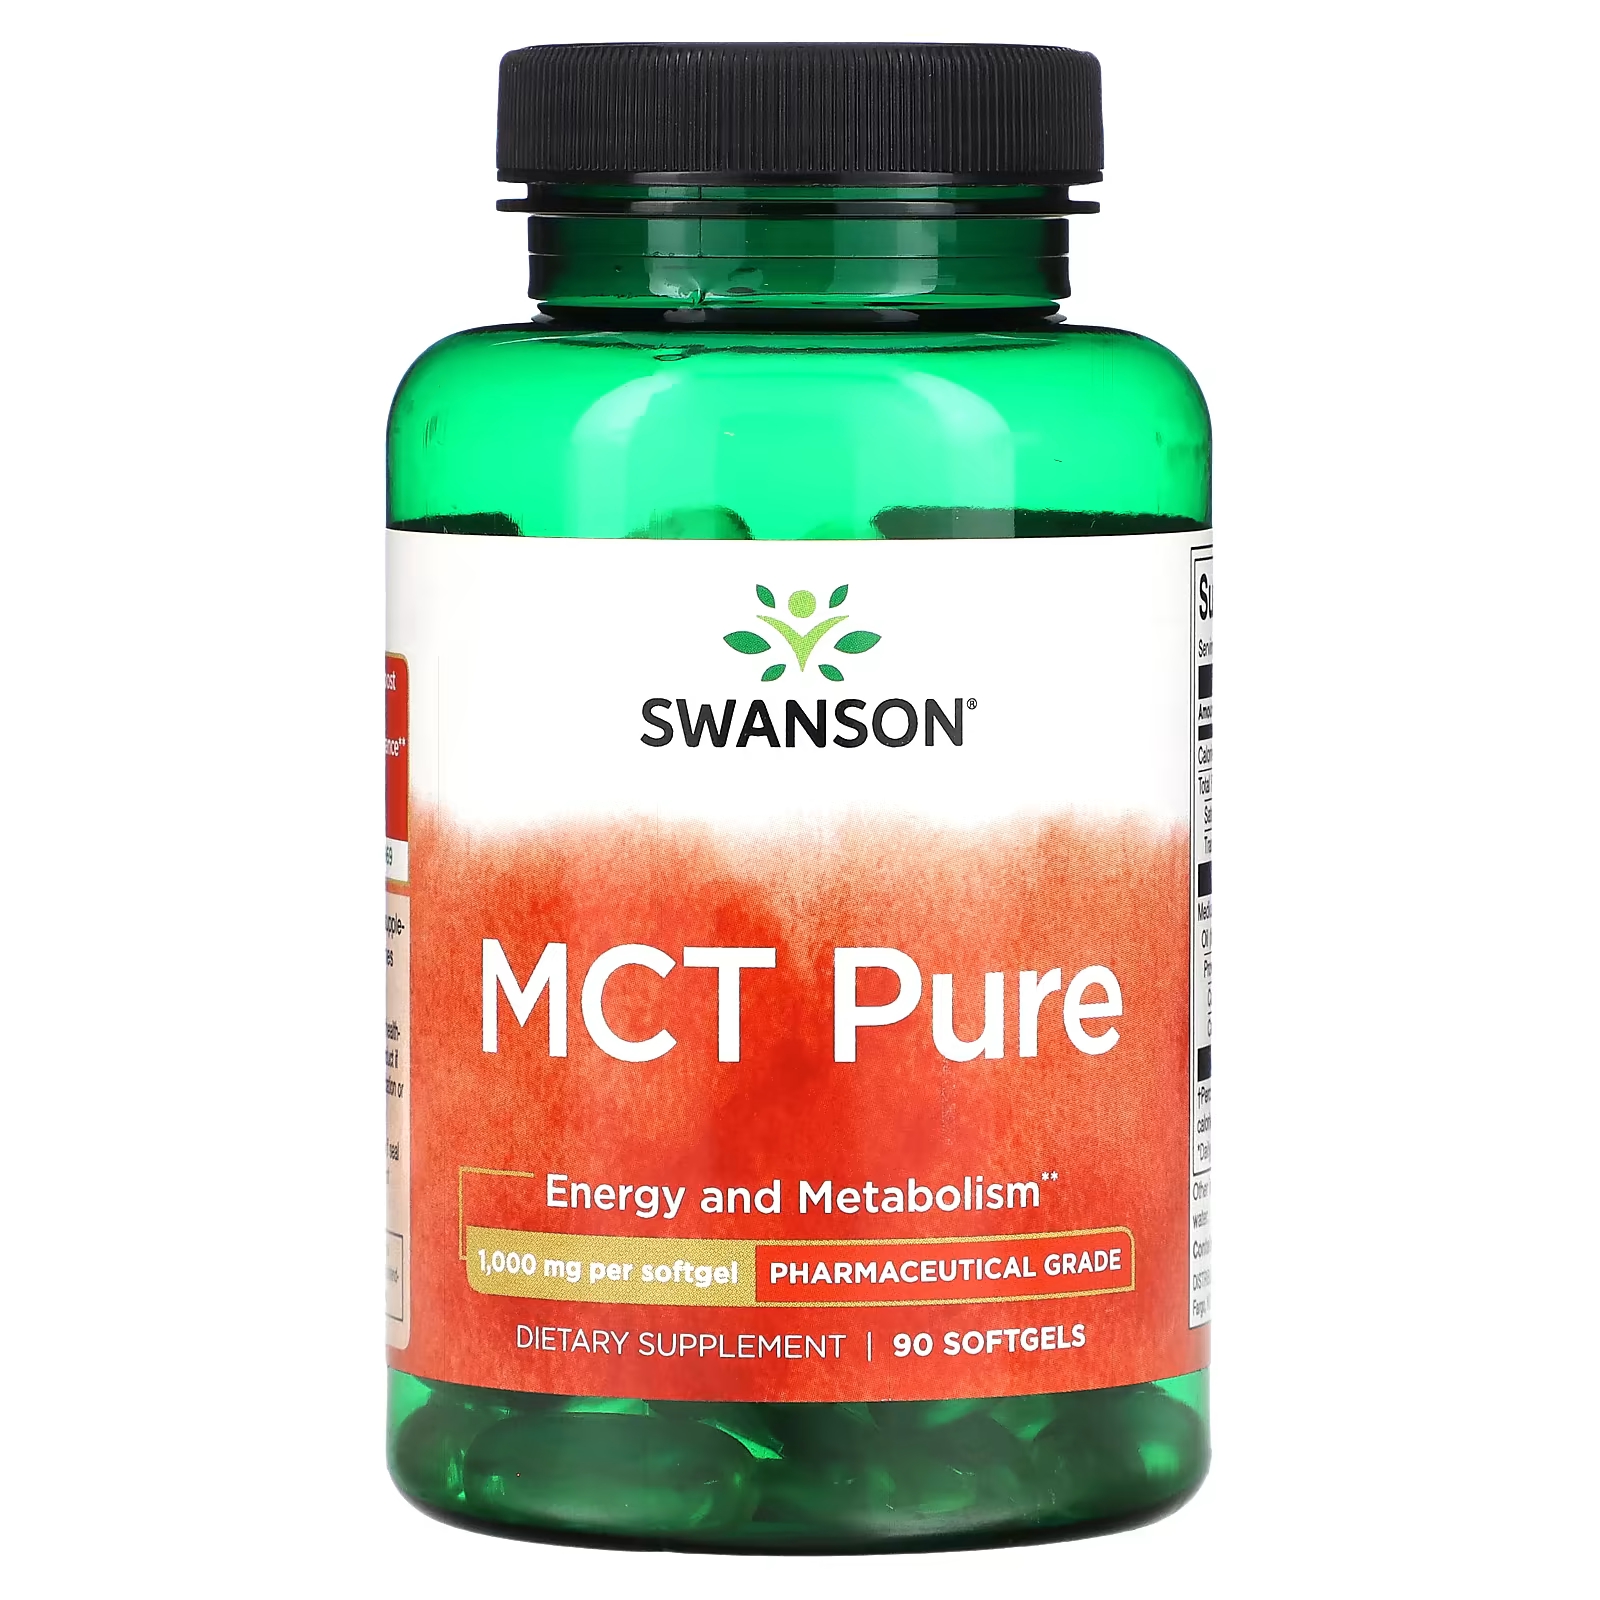 Пищевая добавка Swanson MCT Pure 1000 мг, 90 мягких таблеток пищевая добавка nutrabio cla 800 мг 90 мягких таблеток